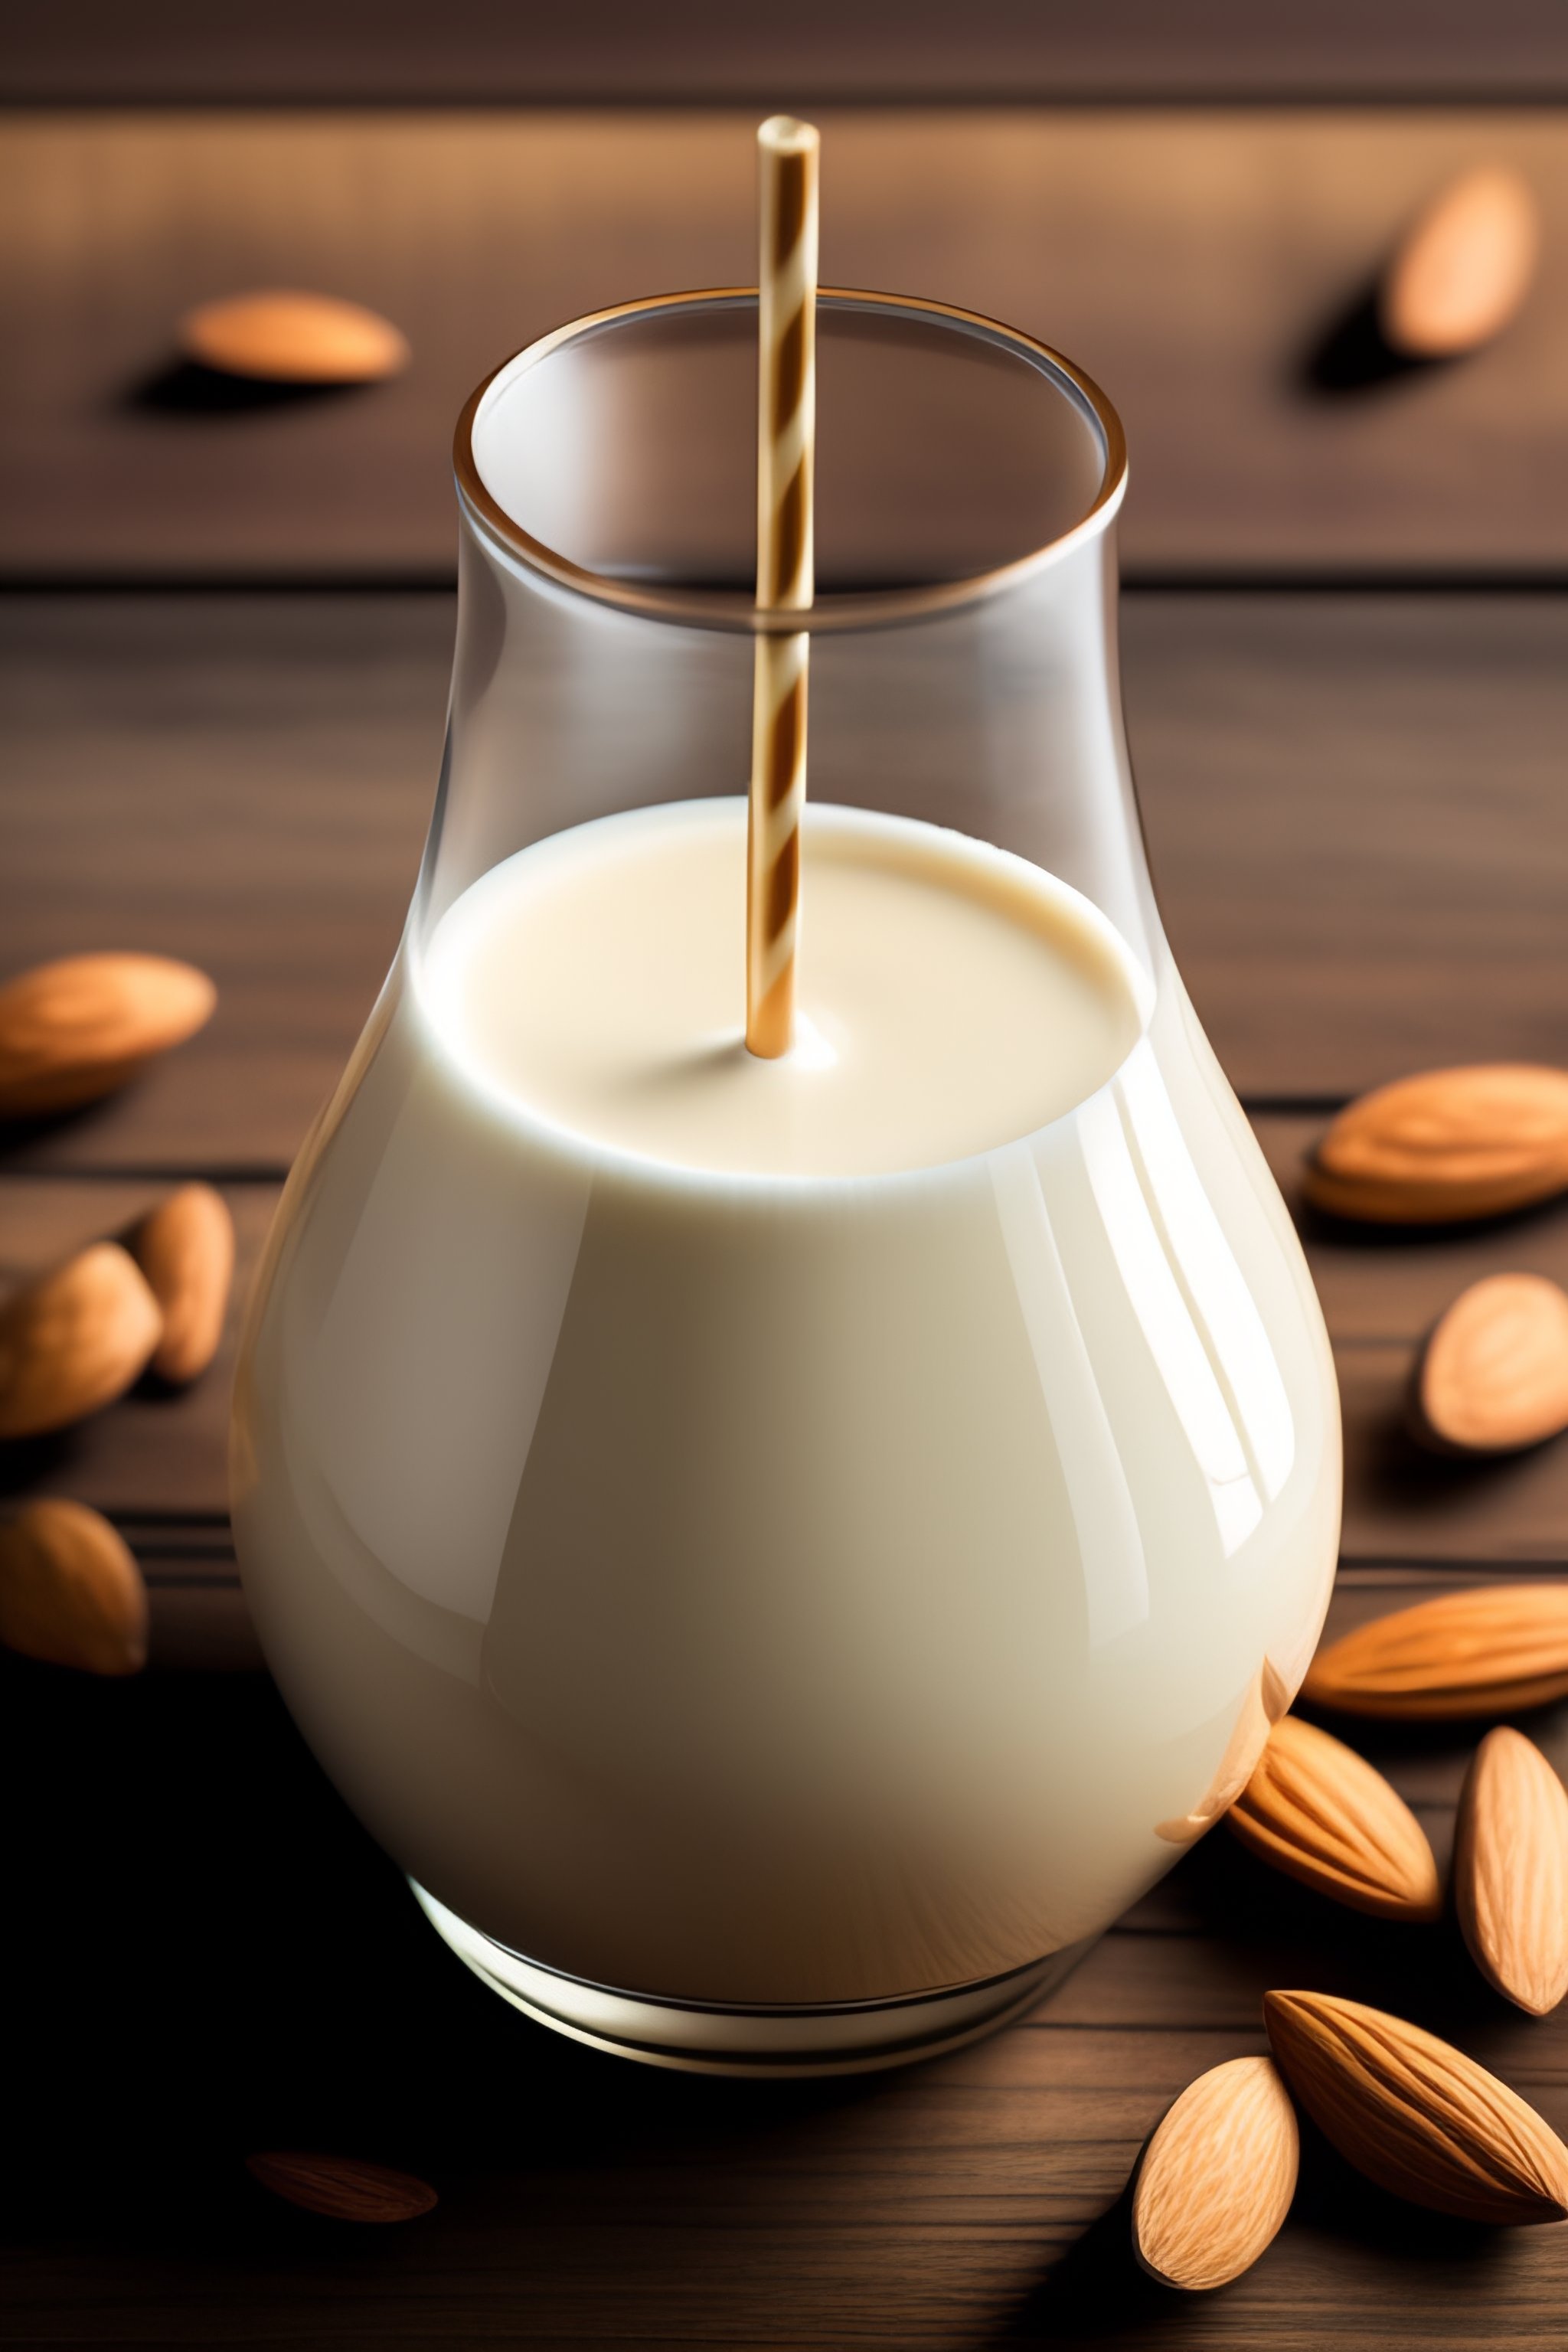 almond nutrients